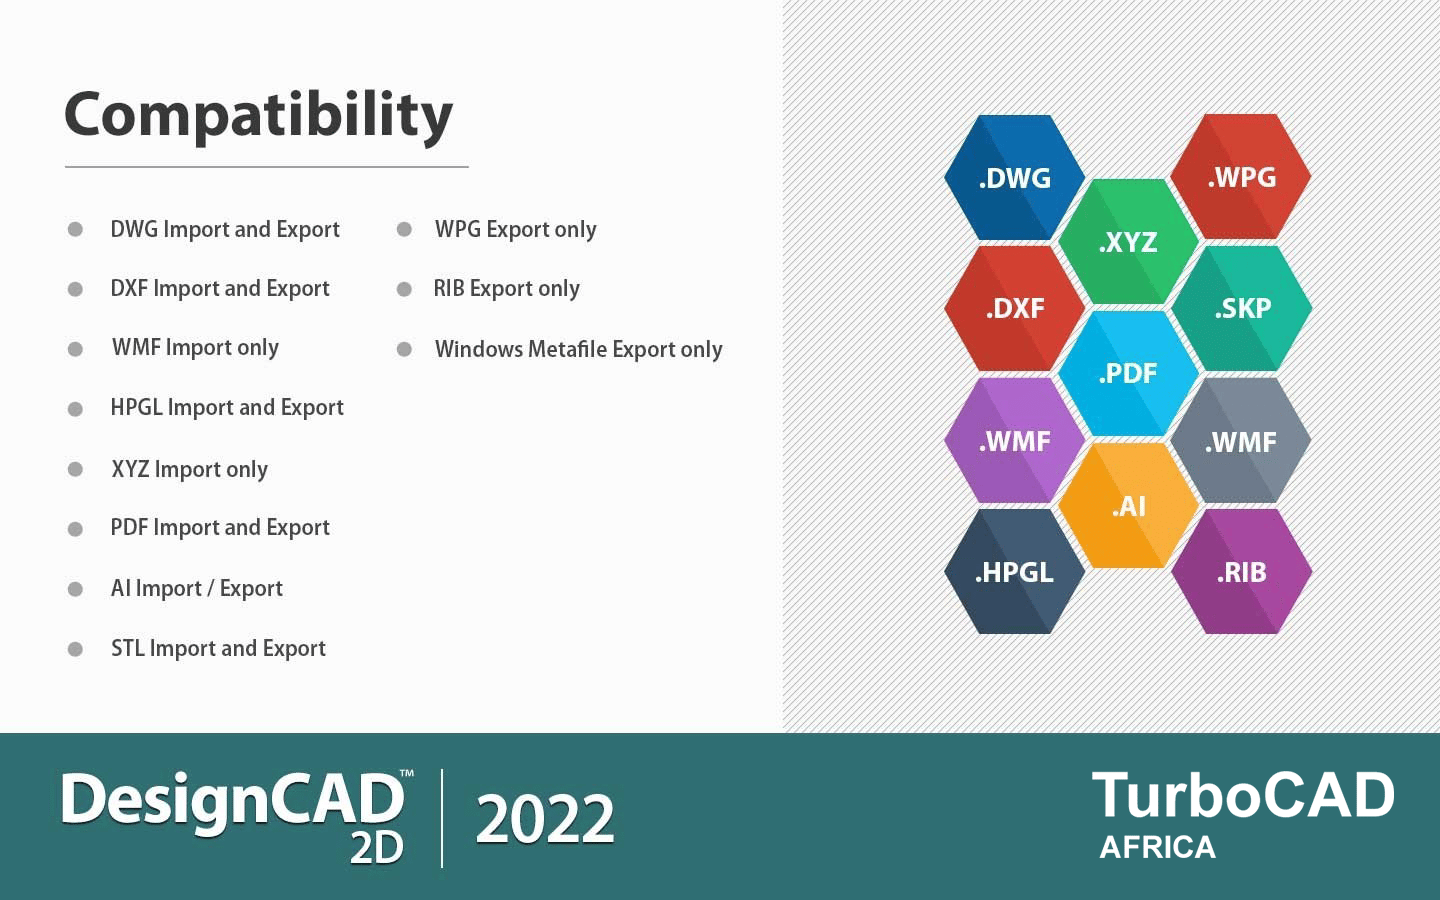 designcad-2d-express-2022-compatibility